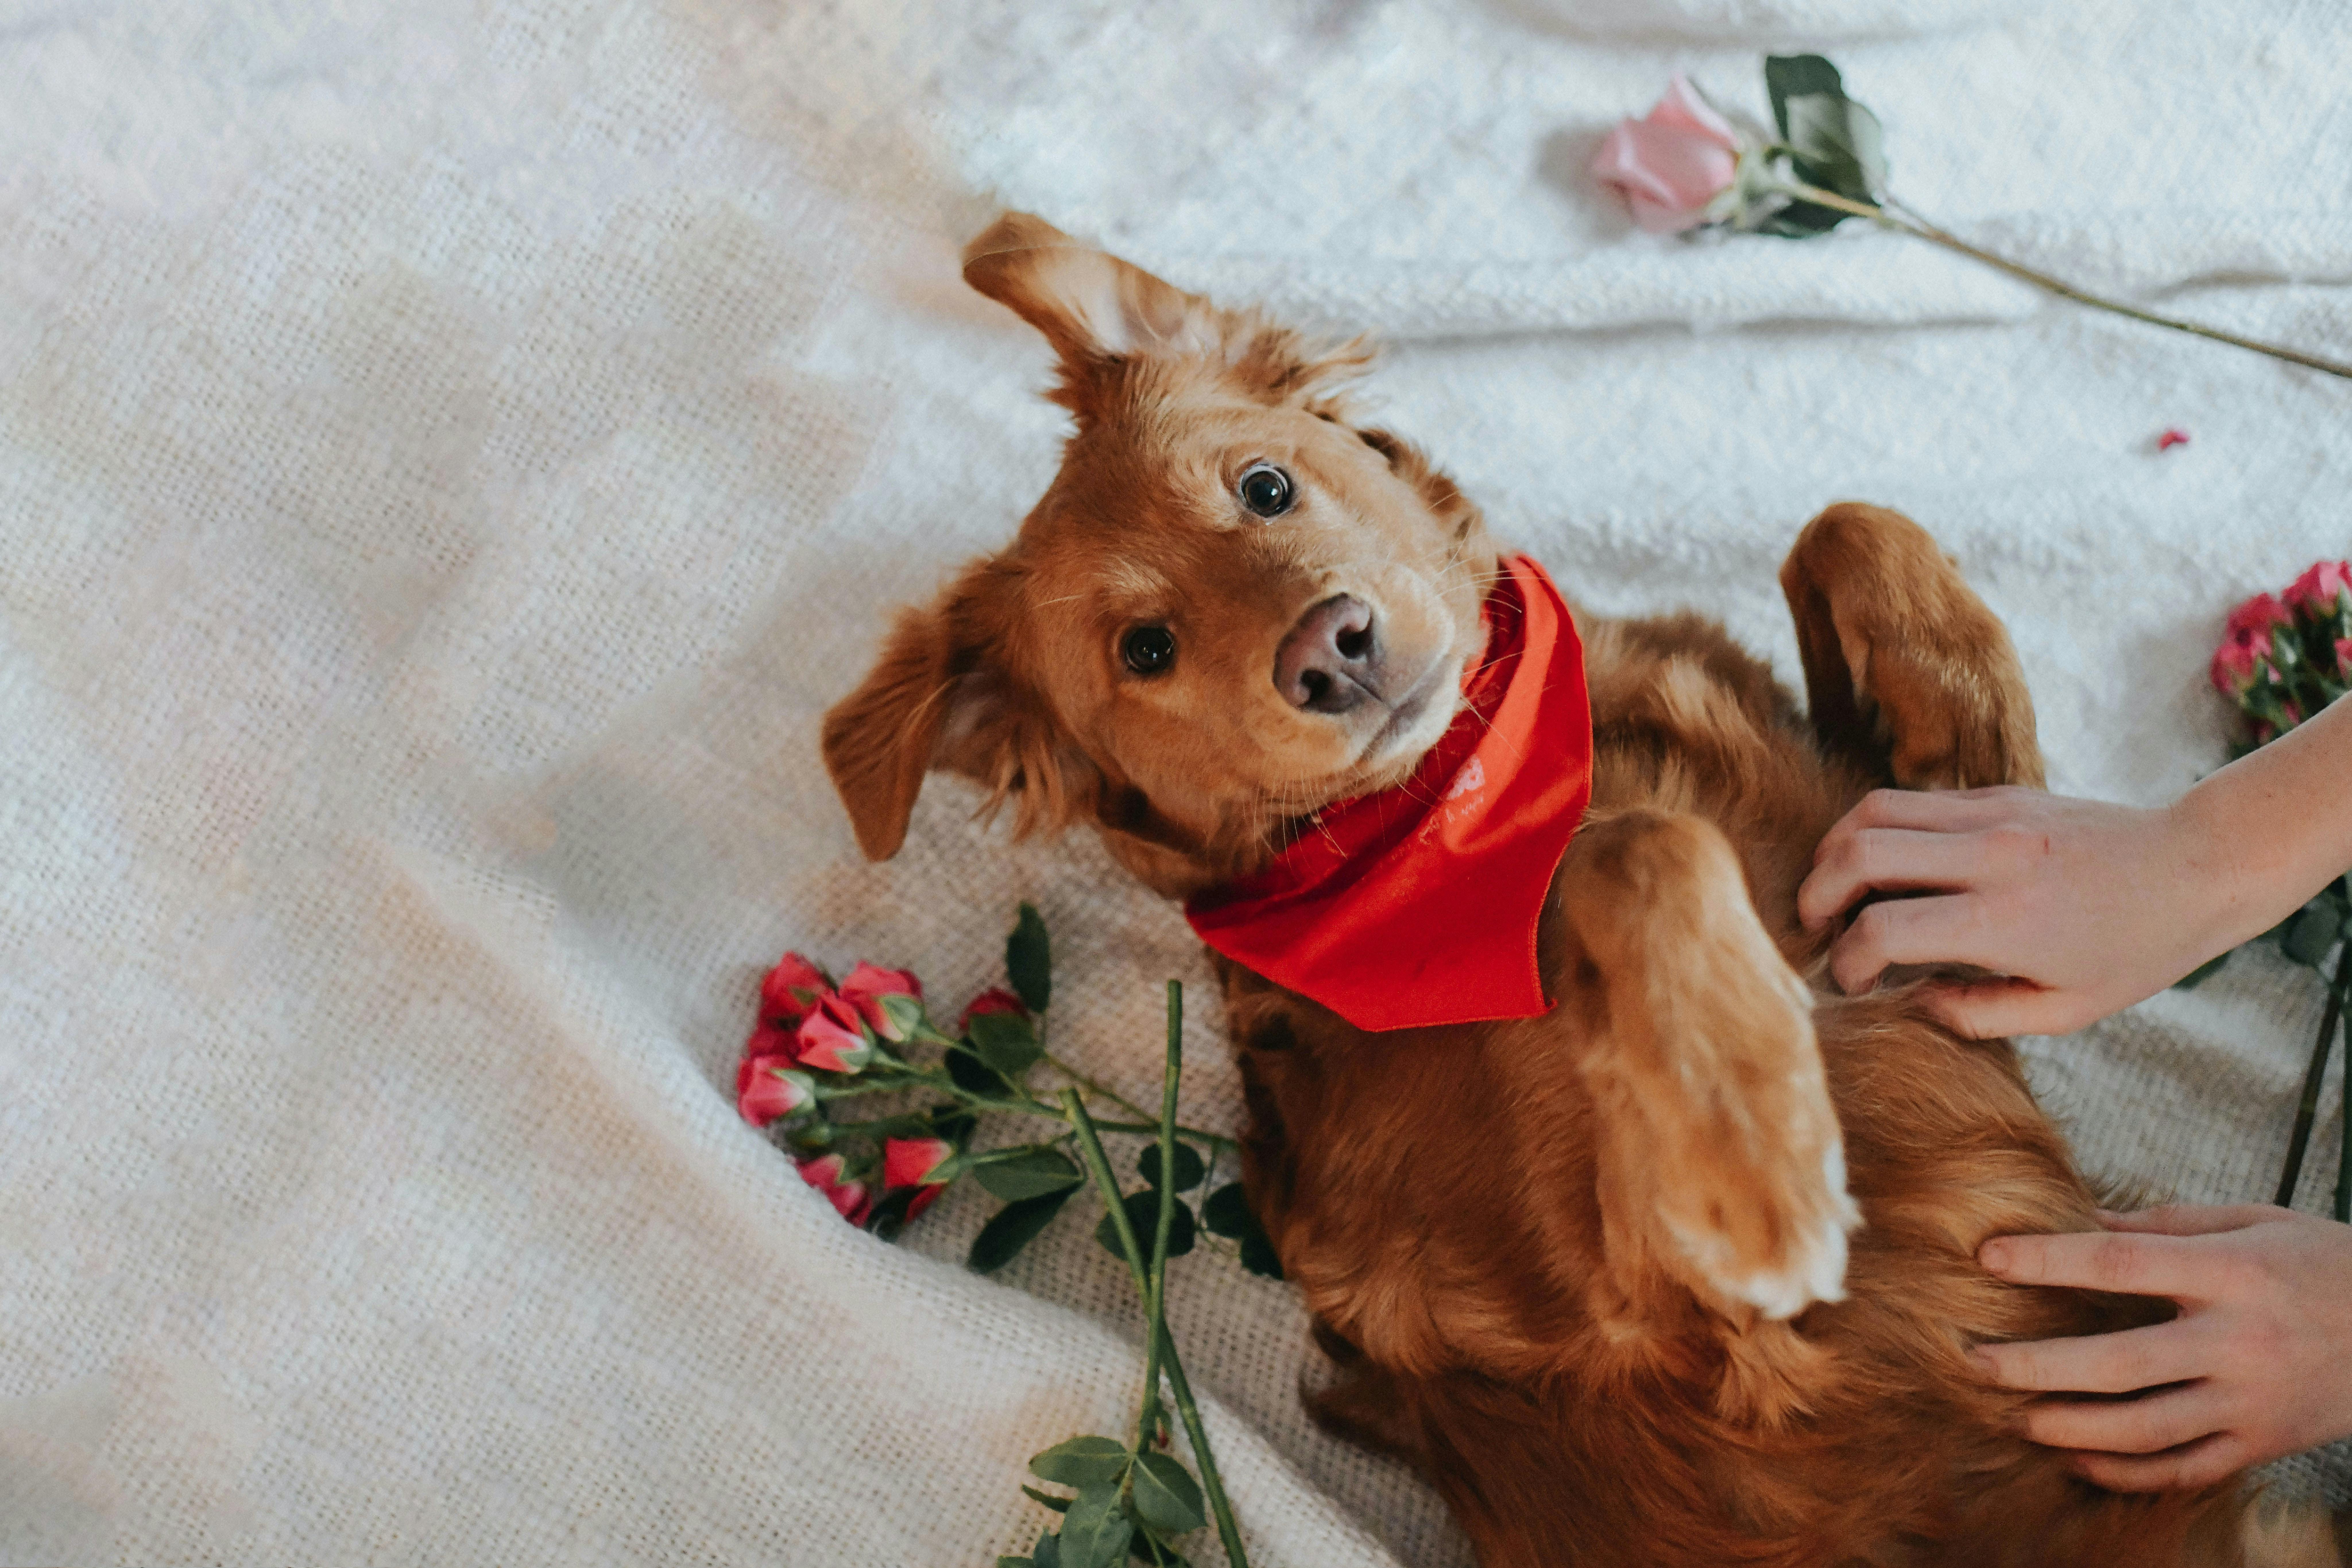 Adopt A Pet Bag Topper Instant Download Valentine's 